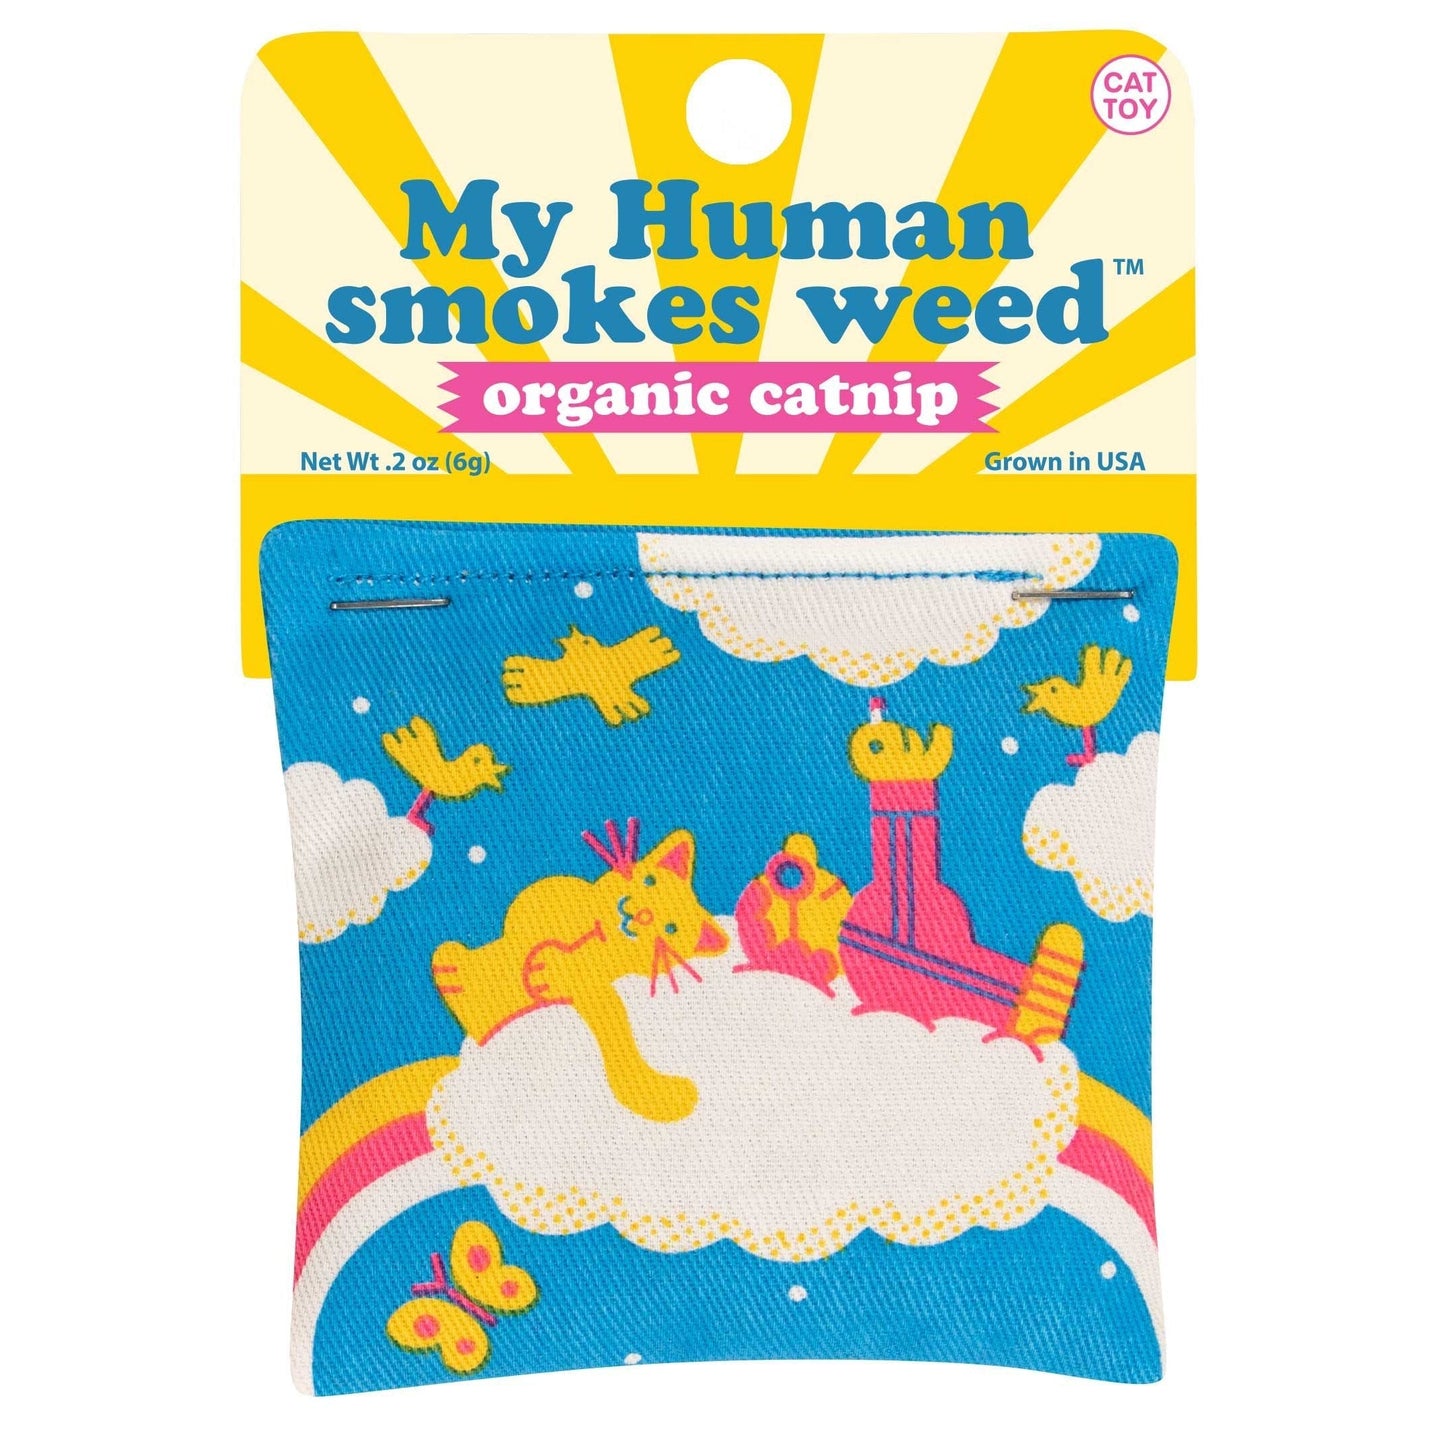 My Human Smokes Weed Catnip Toy | Premium Organic Catnip | Illustrated Cotton Pouch